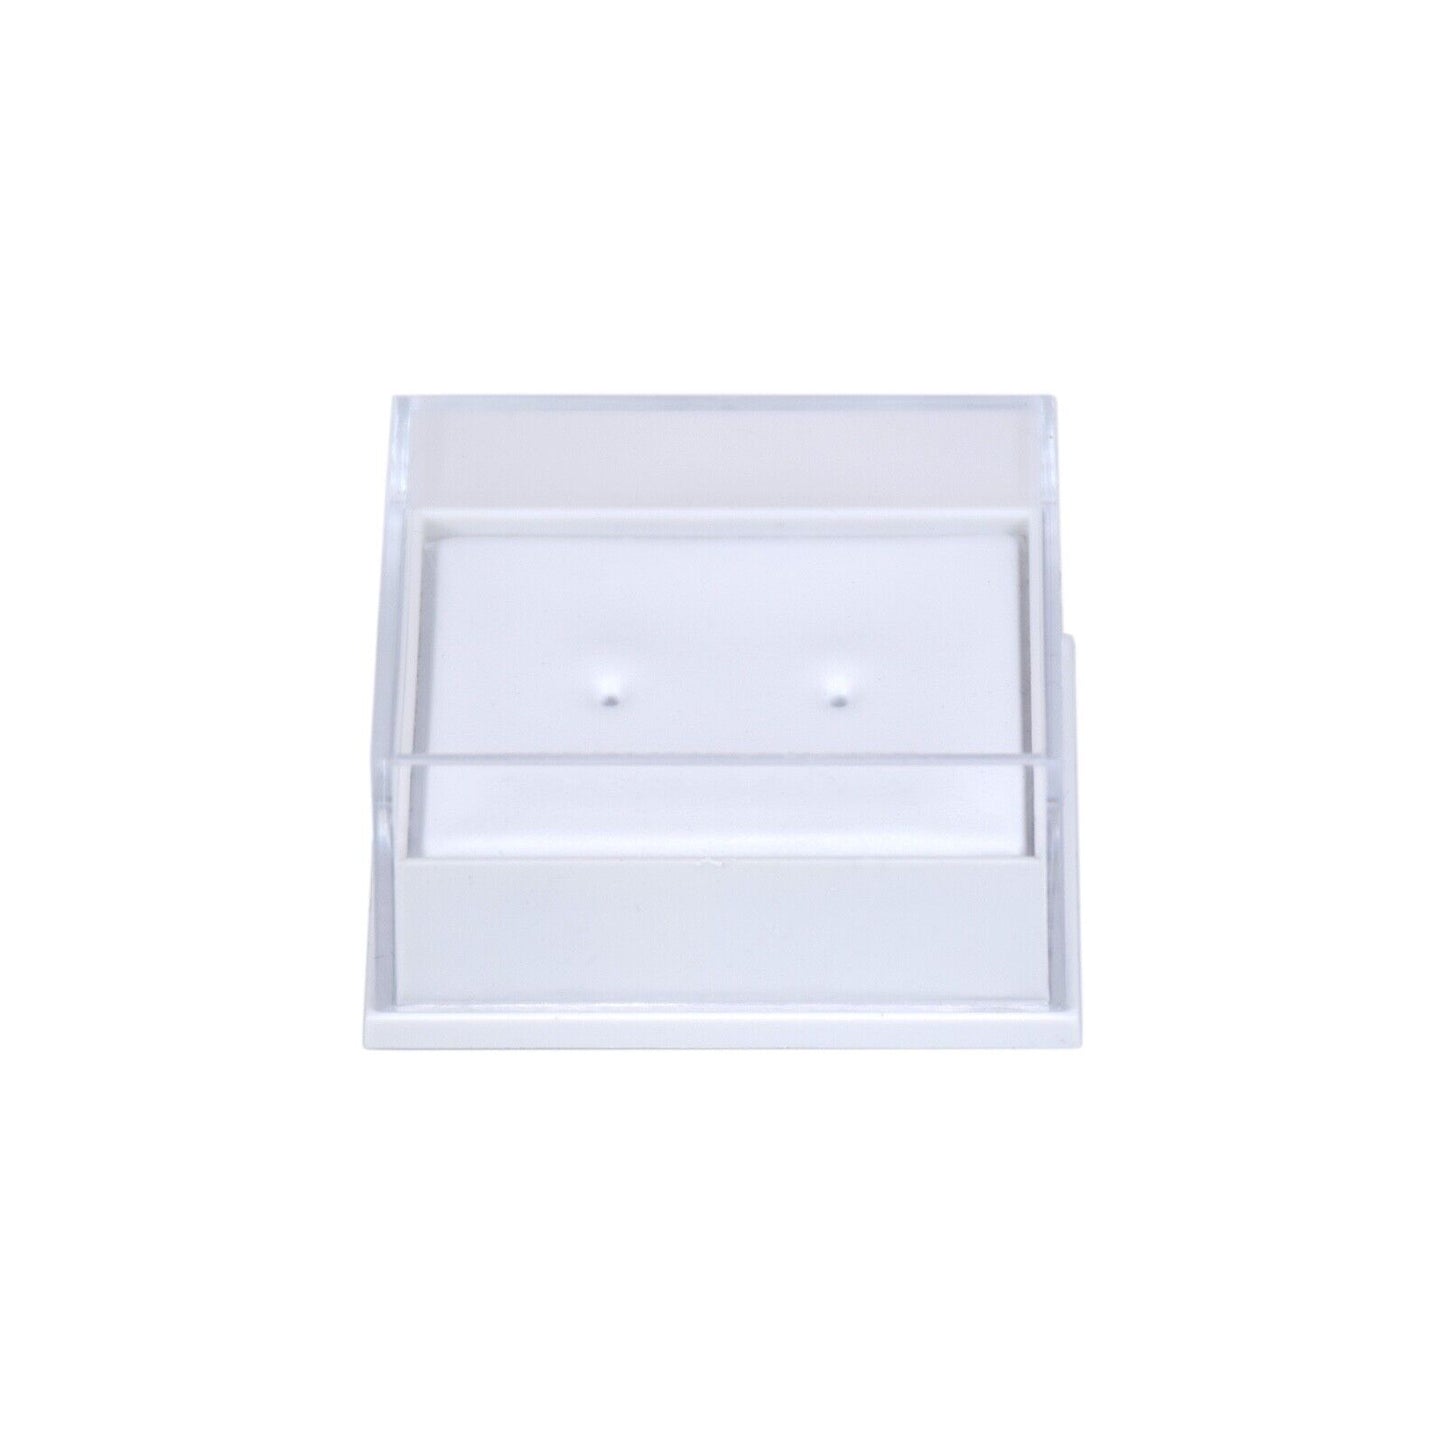 20x Clear Lid Earring Display Boxes Plain Pad 41 x 35 x 21 mm